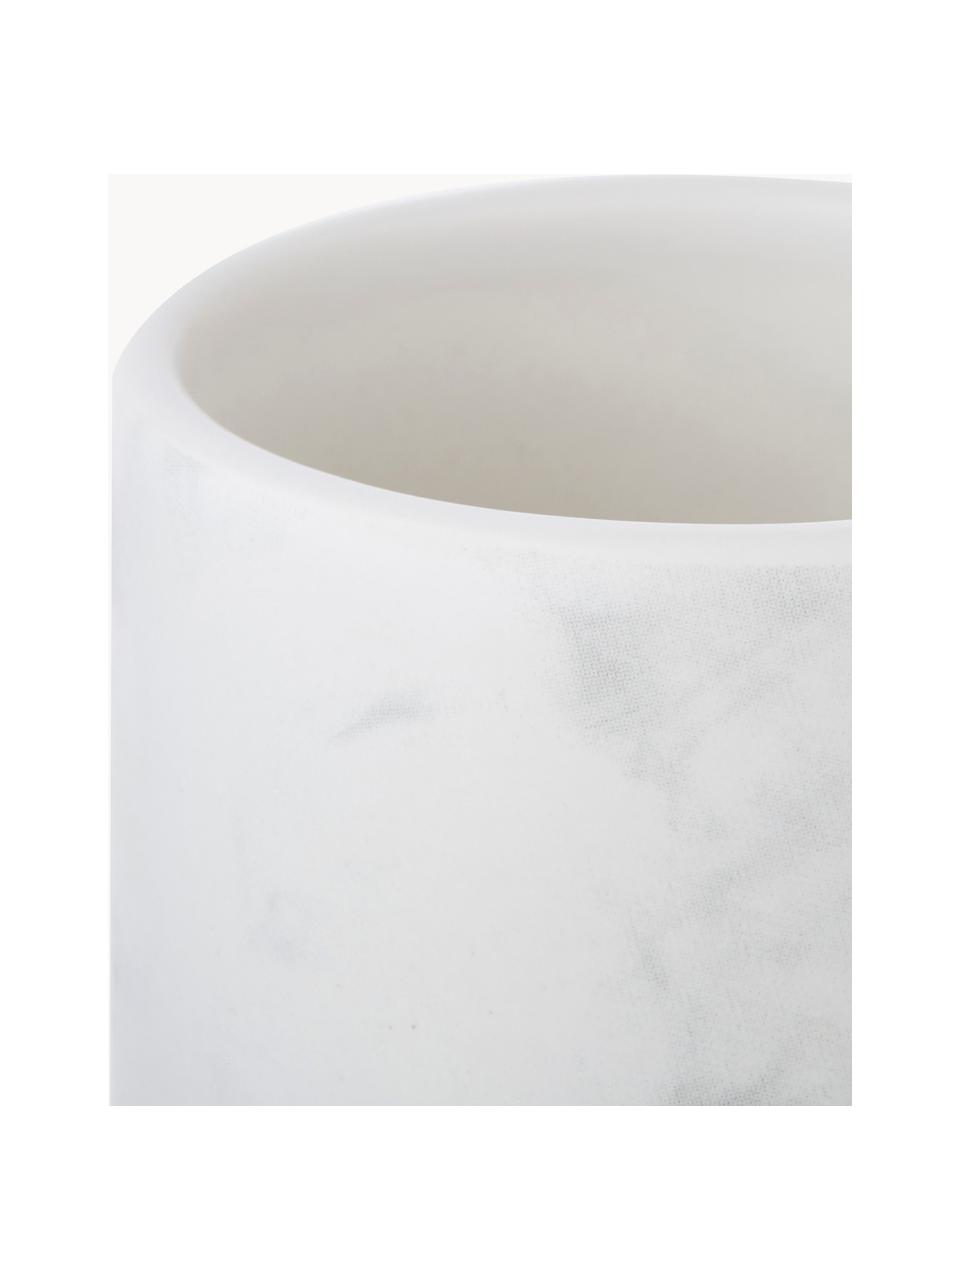 Zahnputzbecher Daro in Marmoroptik, Keramik, Weiß, Ø 7 x H 11 cm